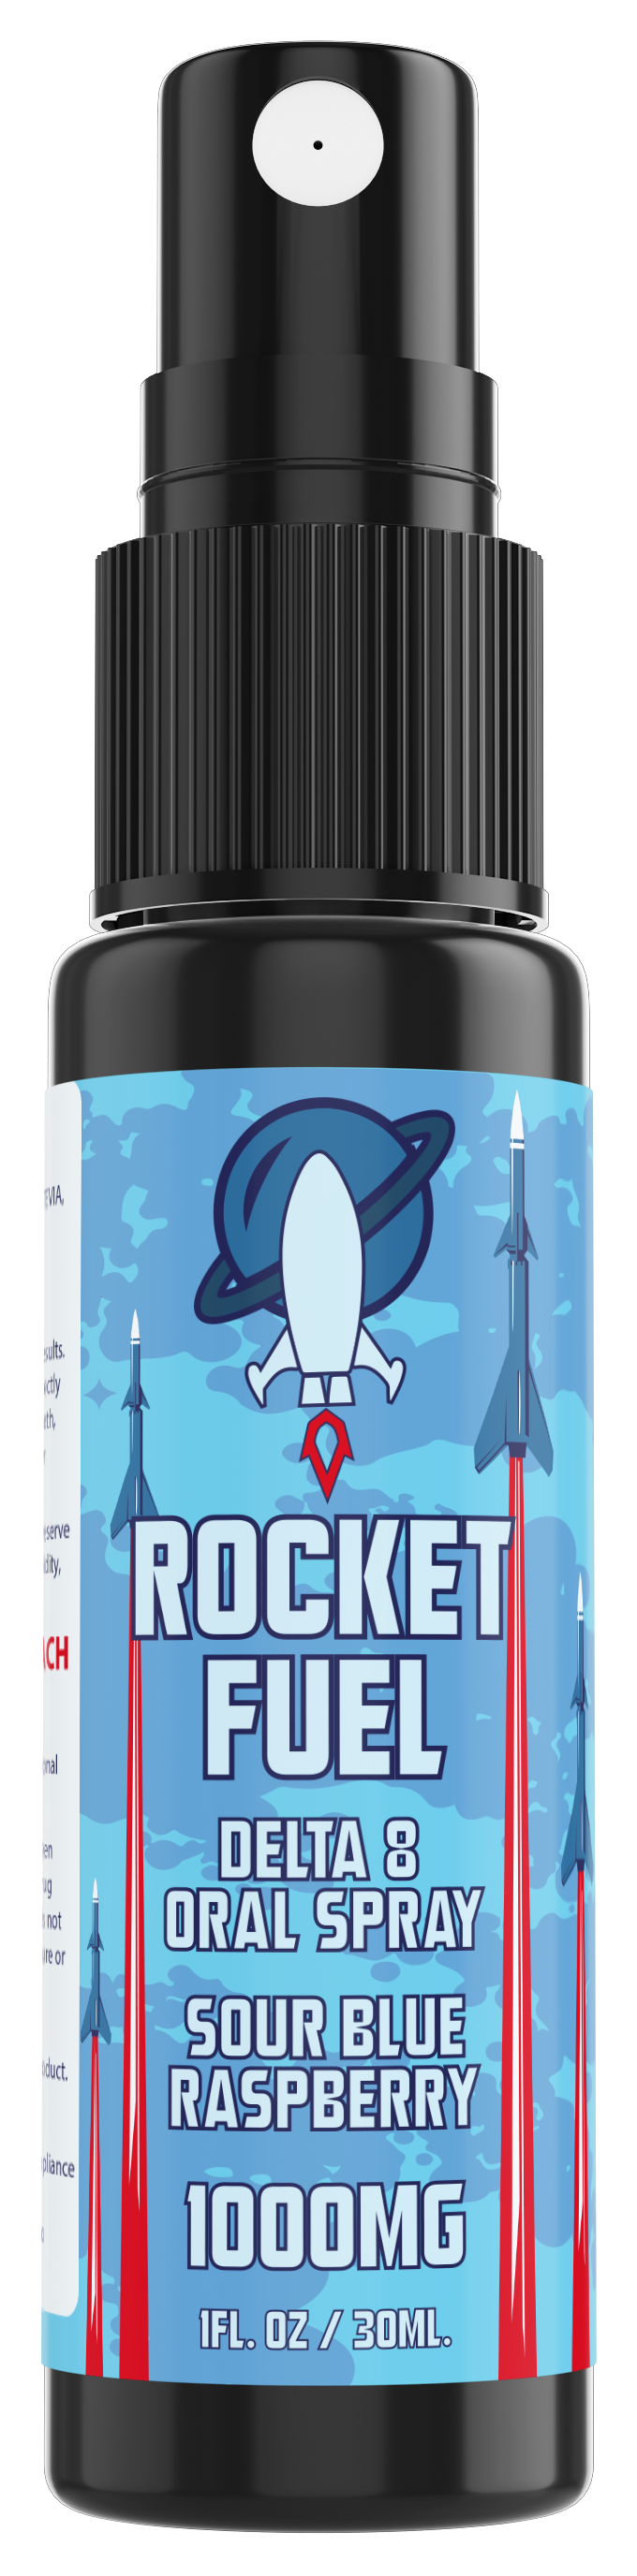 Master mock up d8flight 1000mg d8 oral spray rocket fuel sour blue raspberry 9 16 22 v1